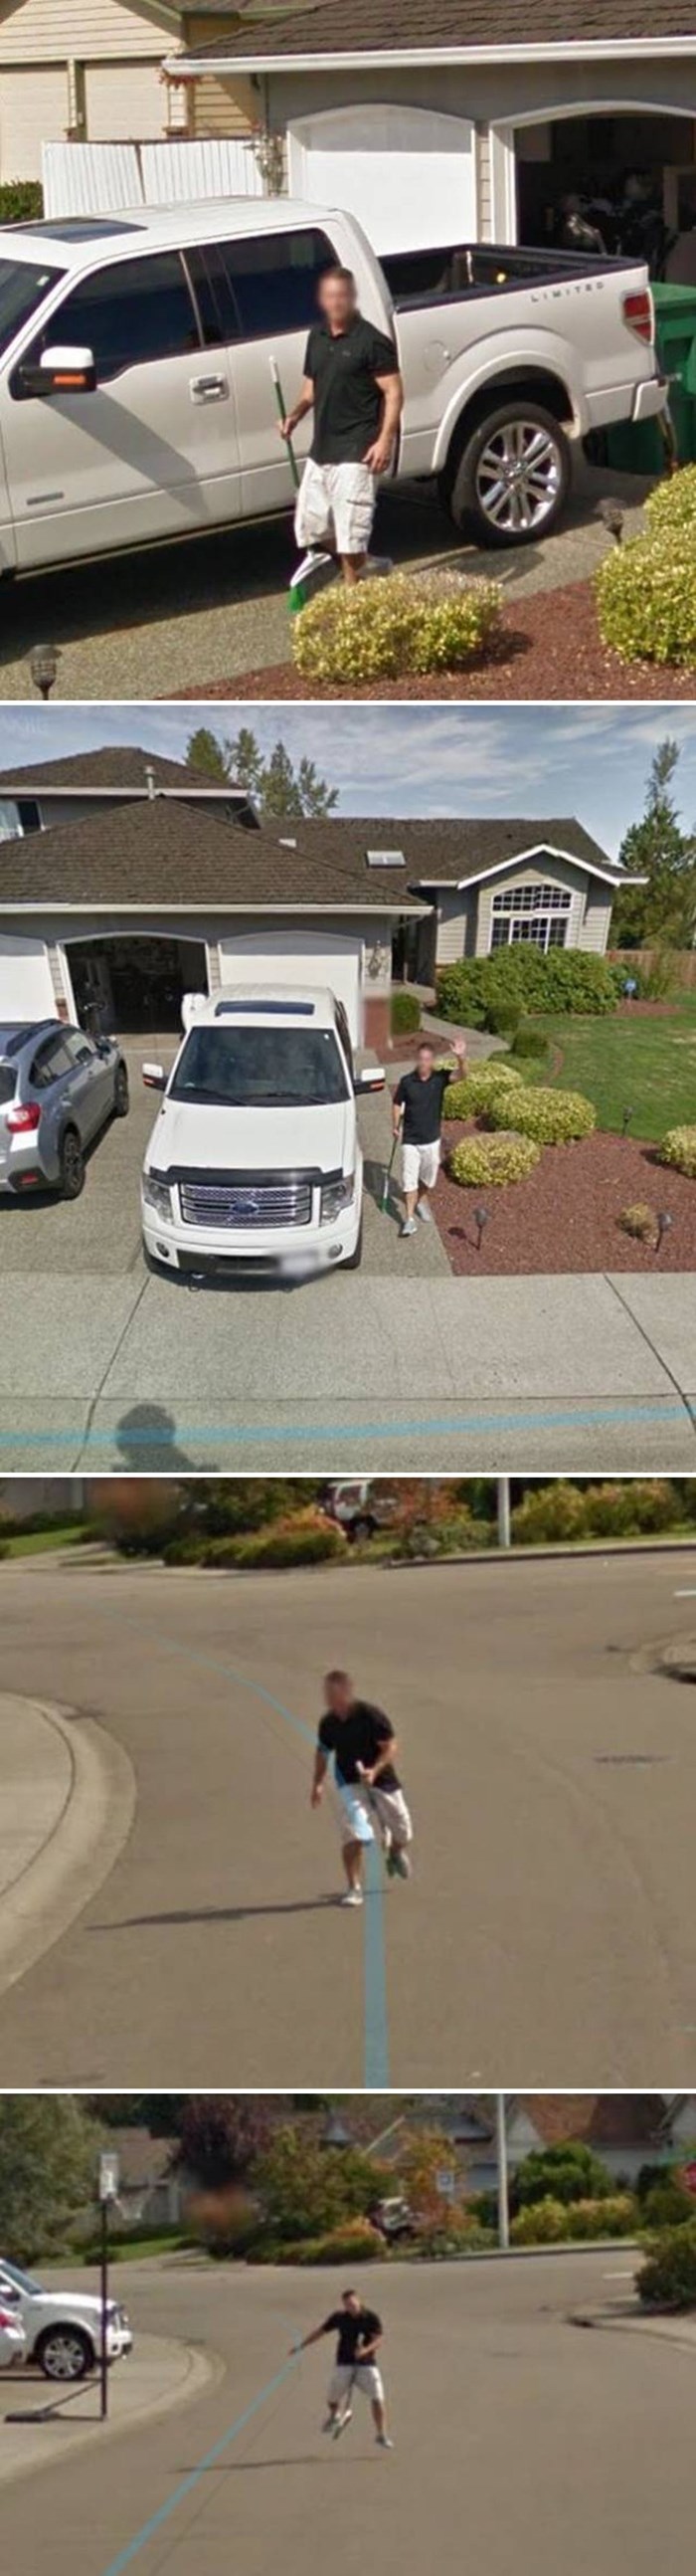 Googleova Street View kamera snimila muškarca s metlom i otkrila njegovu tajnu